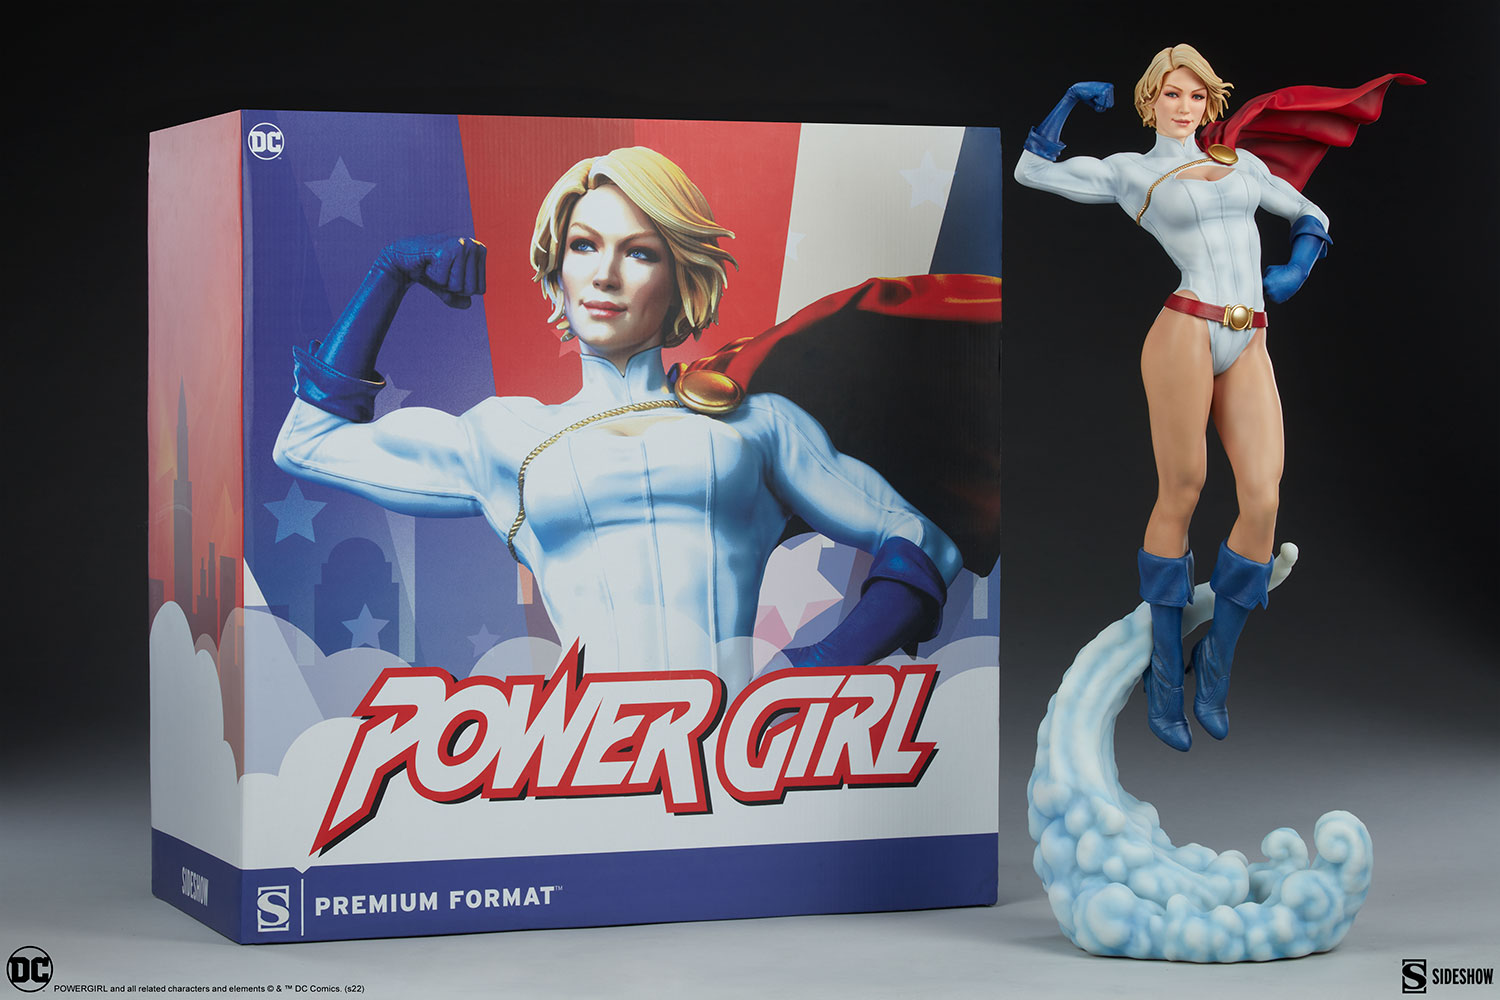 Power Girl Premium Format Figure